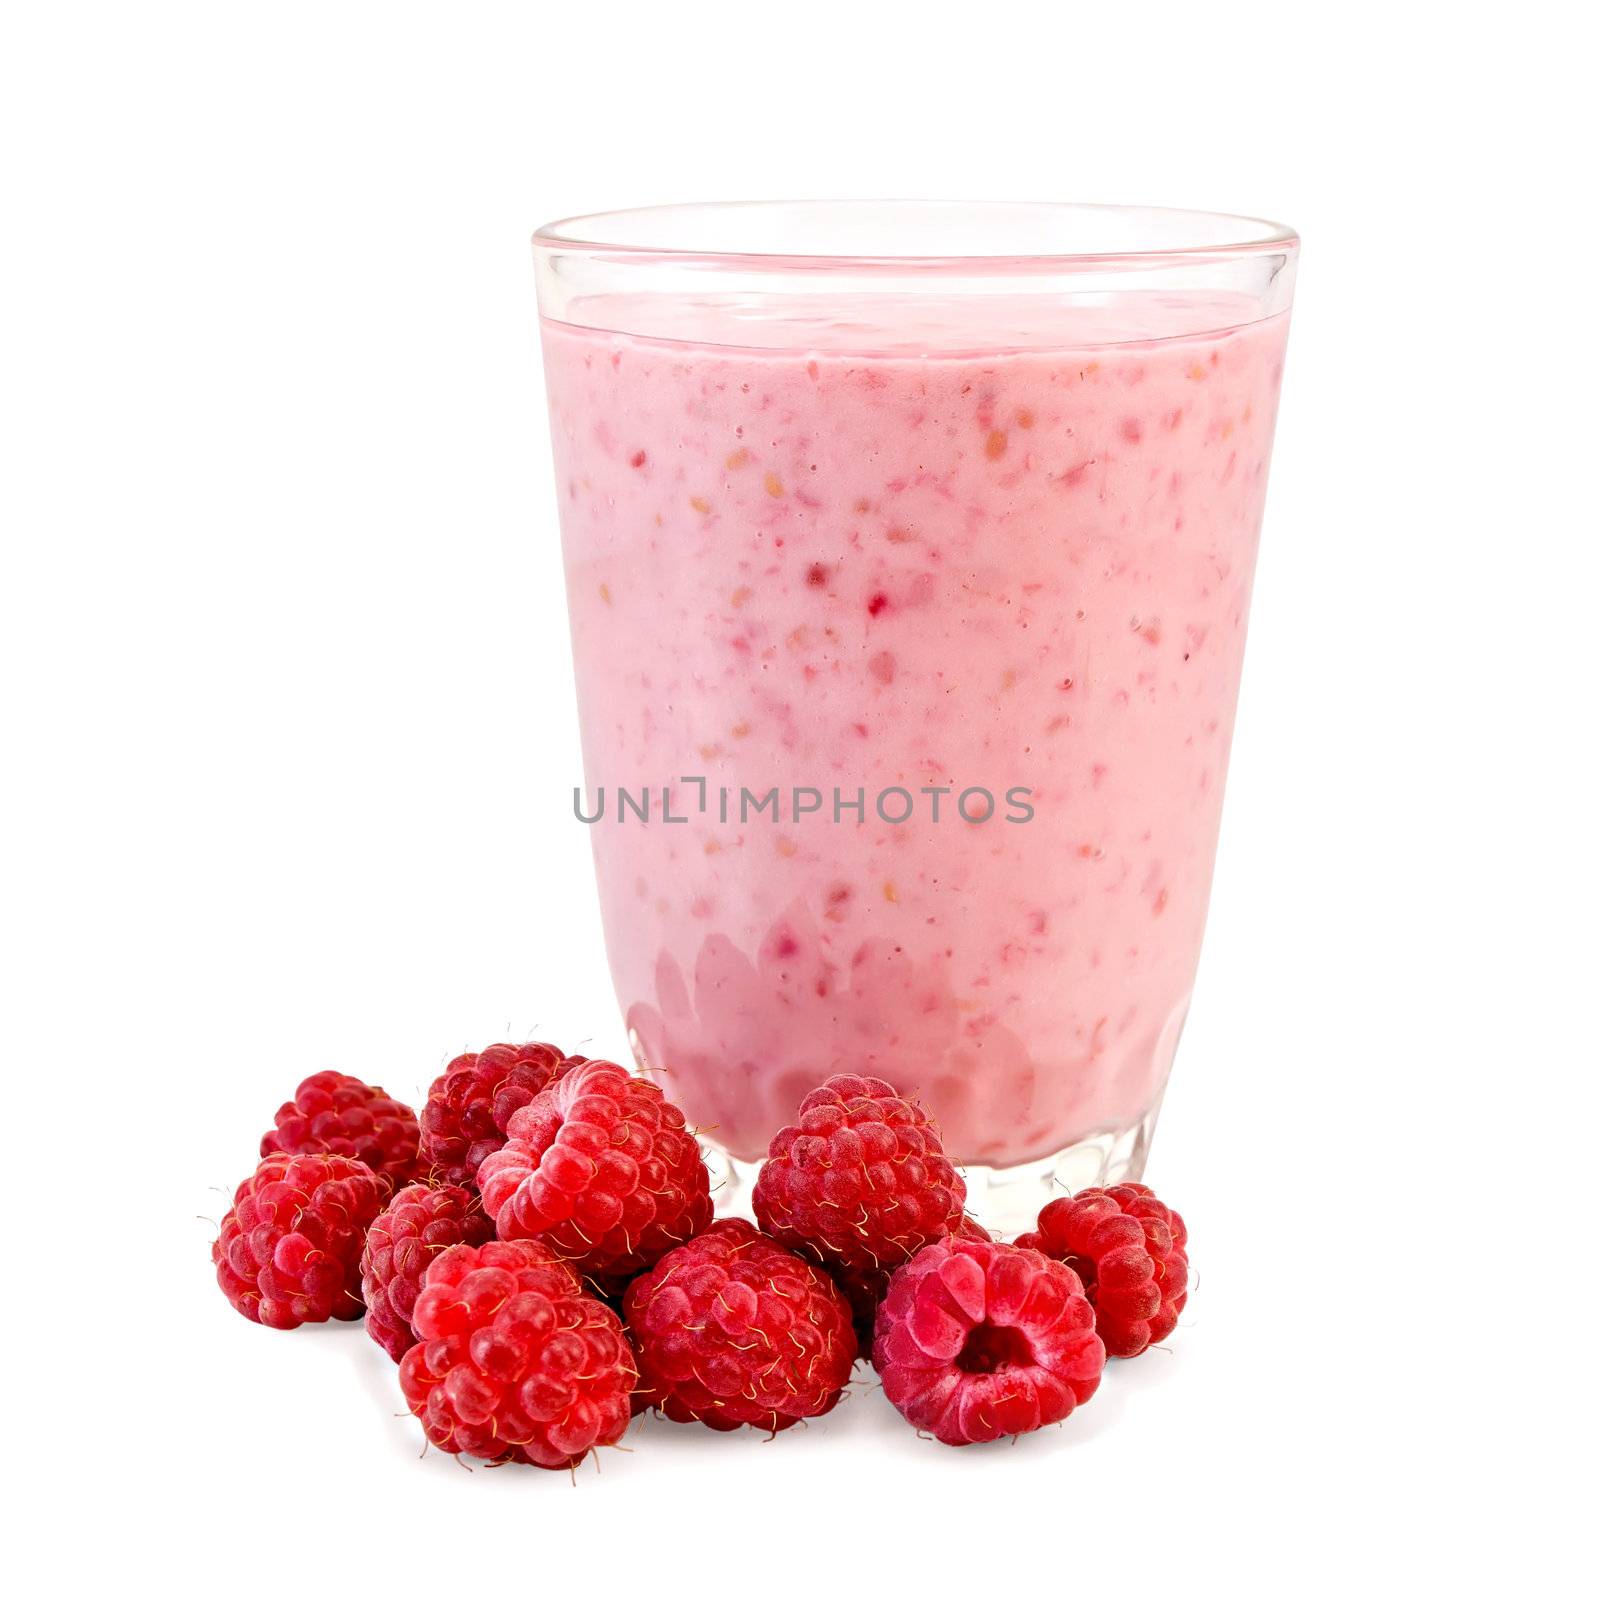 The glass of milkshake, raspberry isolated on white background